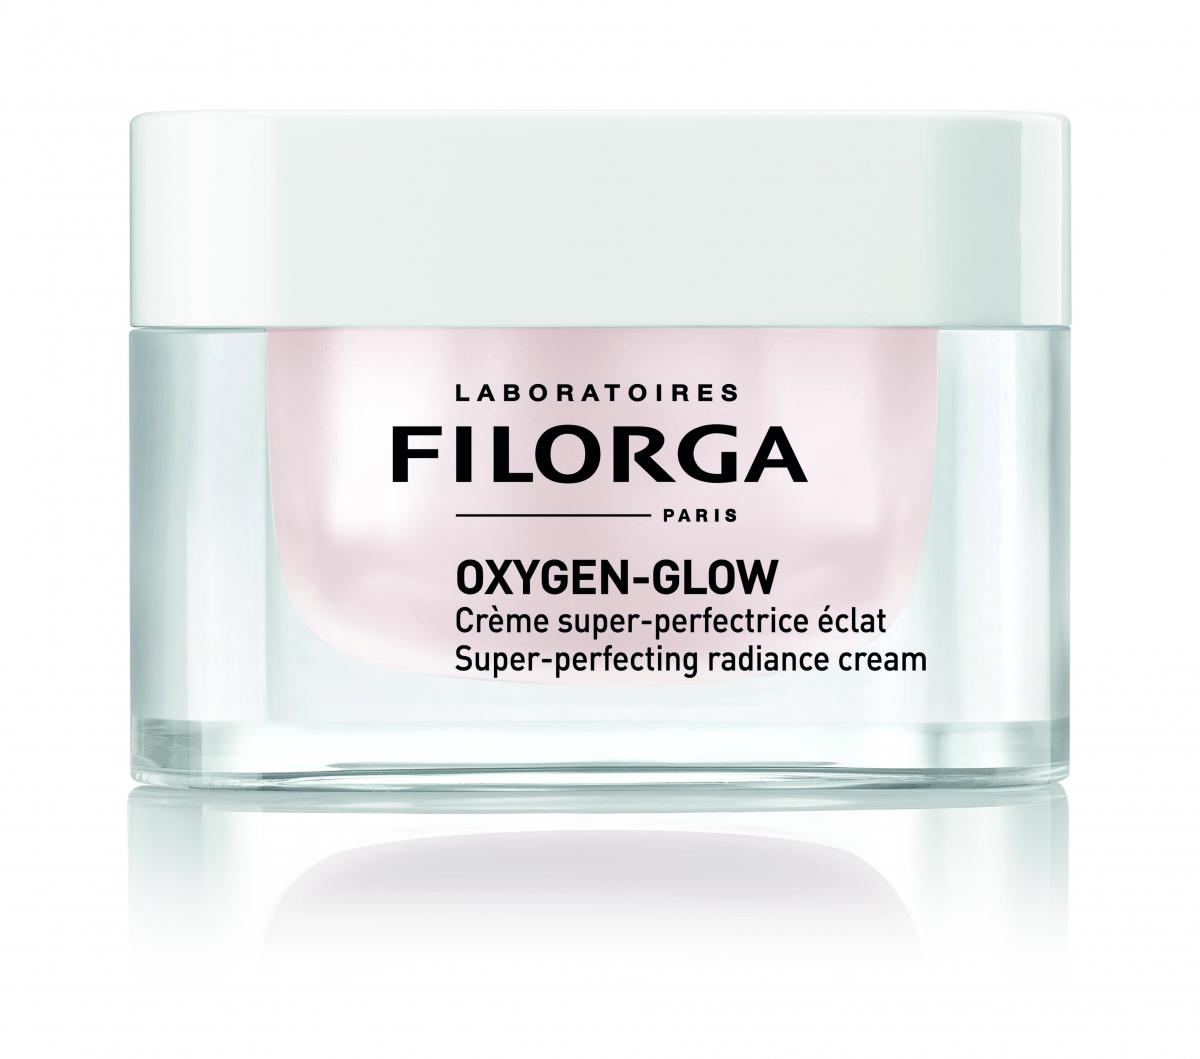 Oxygen-Glow van Filorga